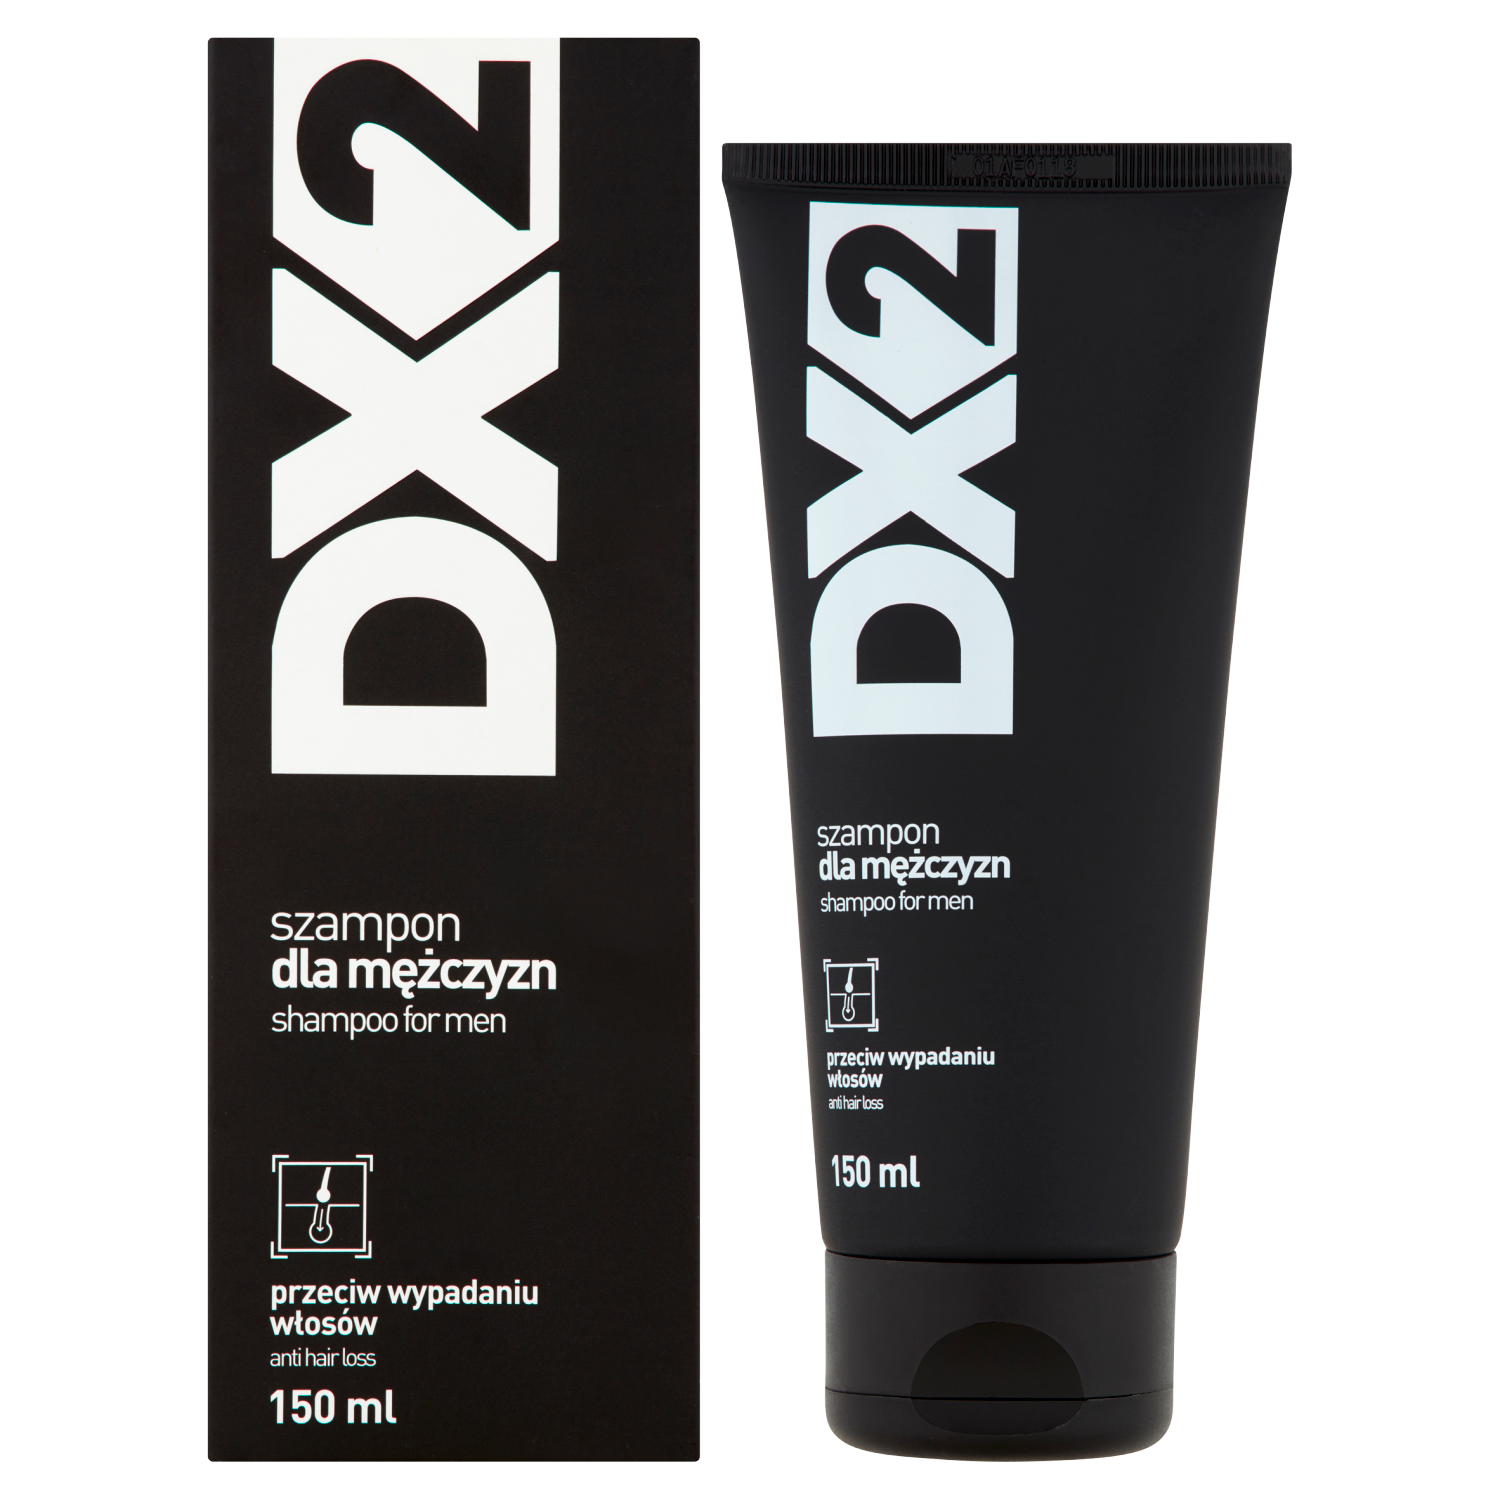 apteka gemini szampon dx2